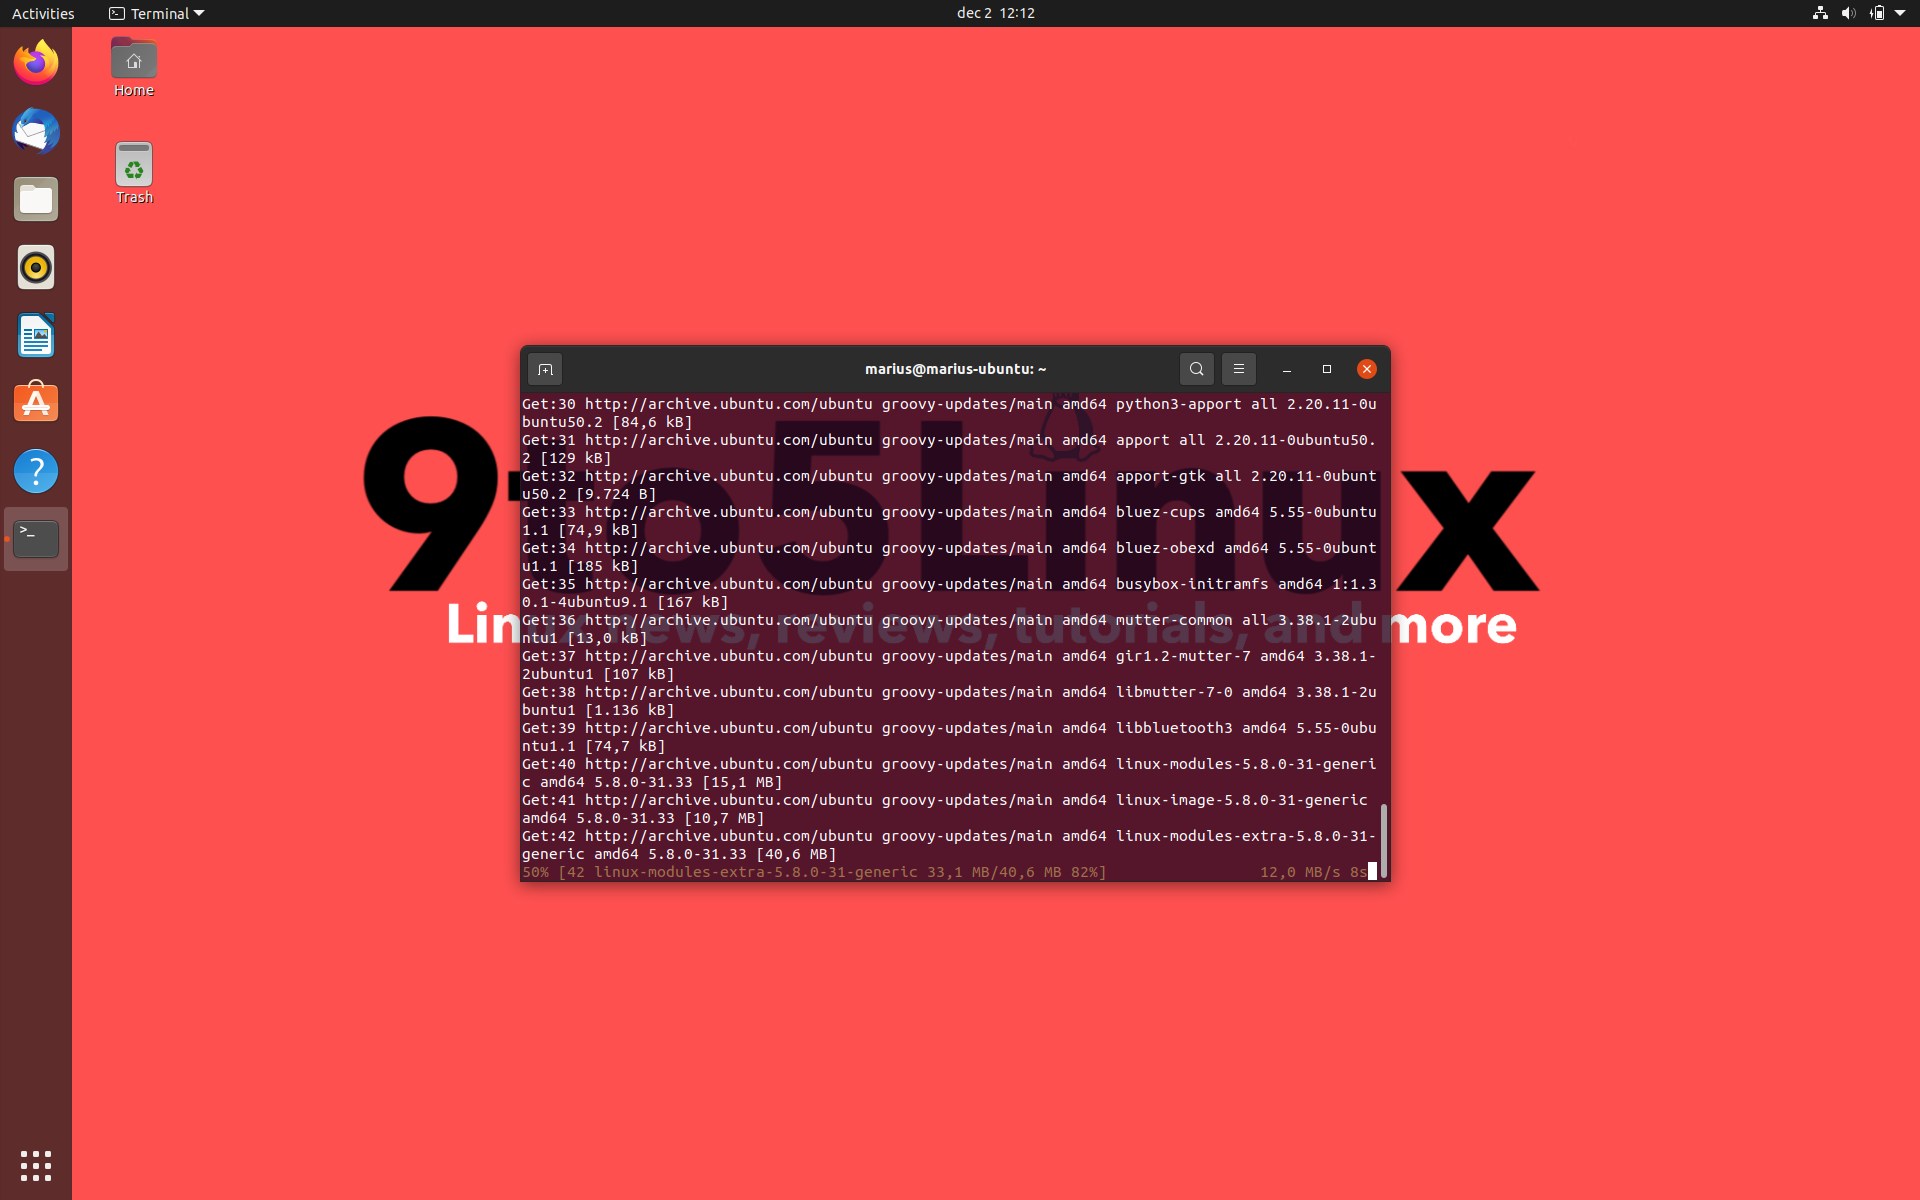 Ubuntu 6150-1: Linux kernel vulnerabilities